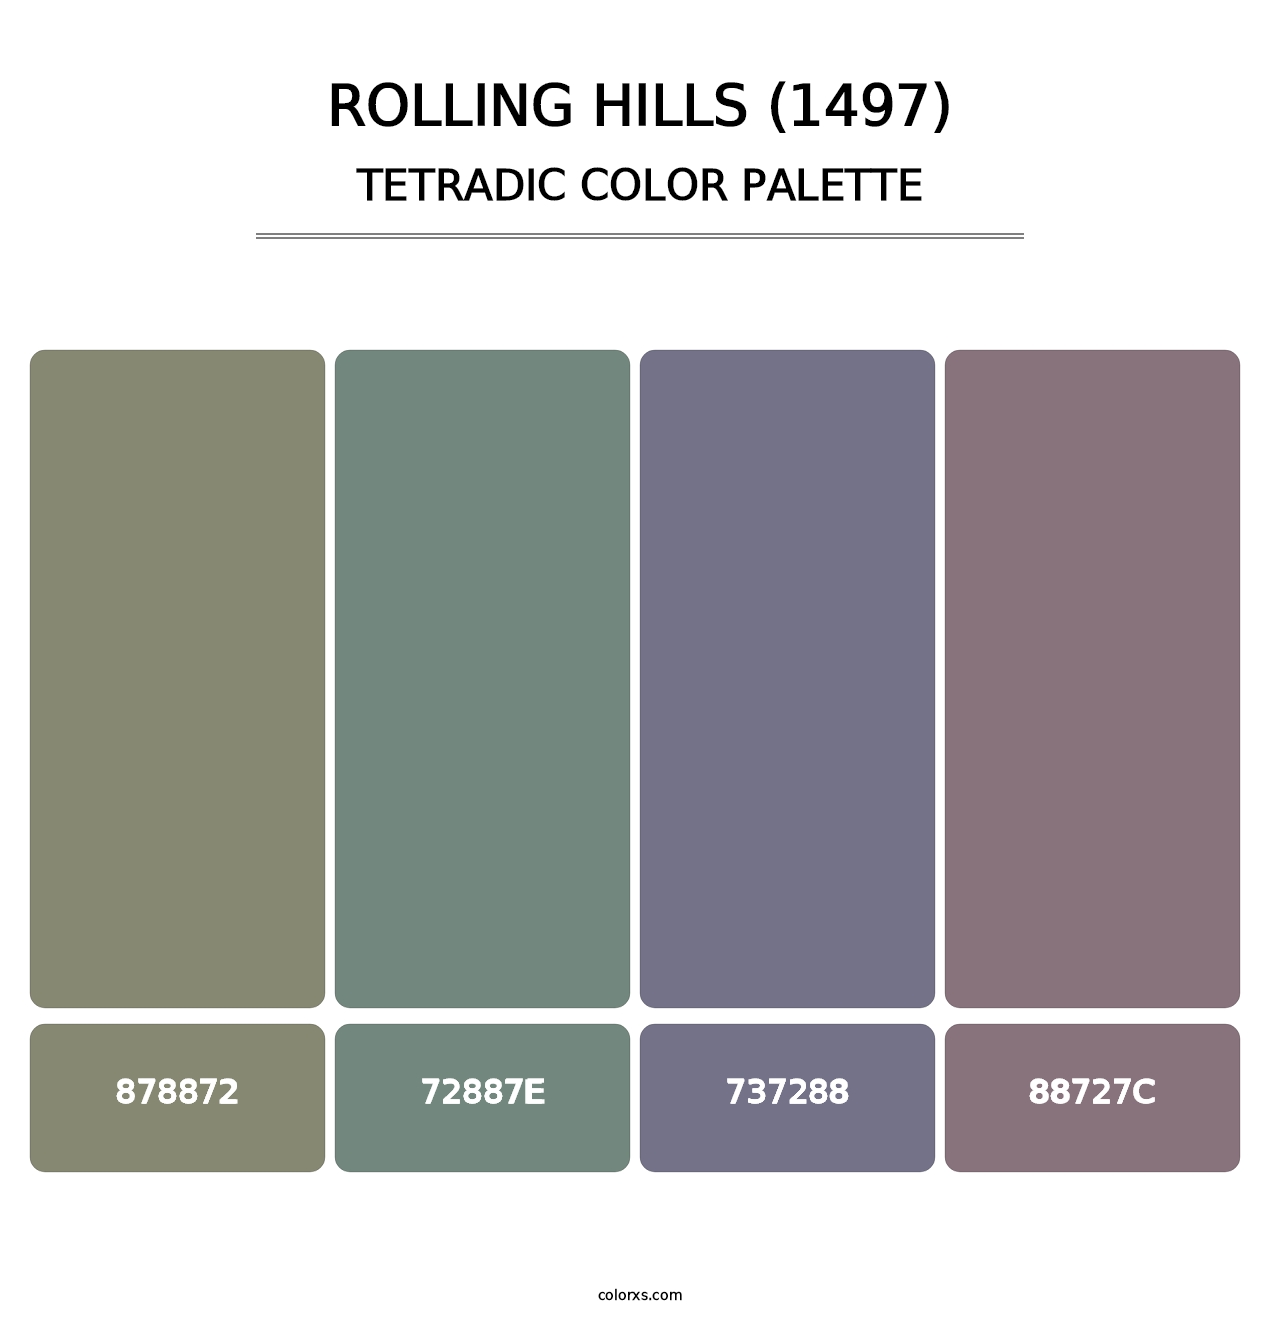 Rolling Hills (1497) - Tetradic Color Palette